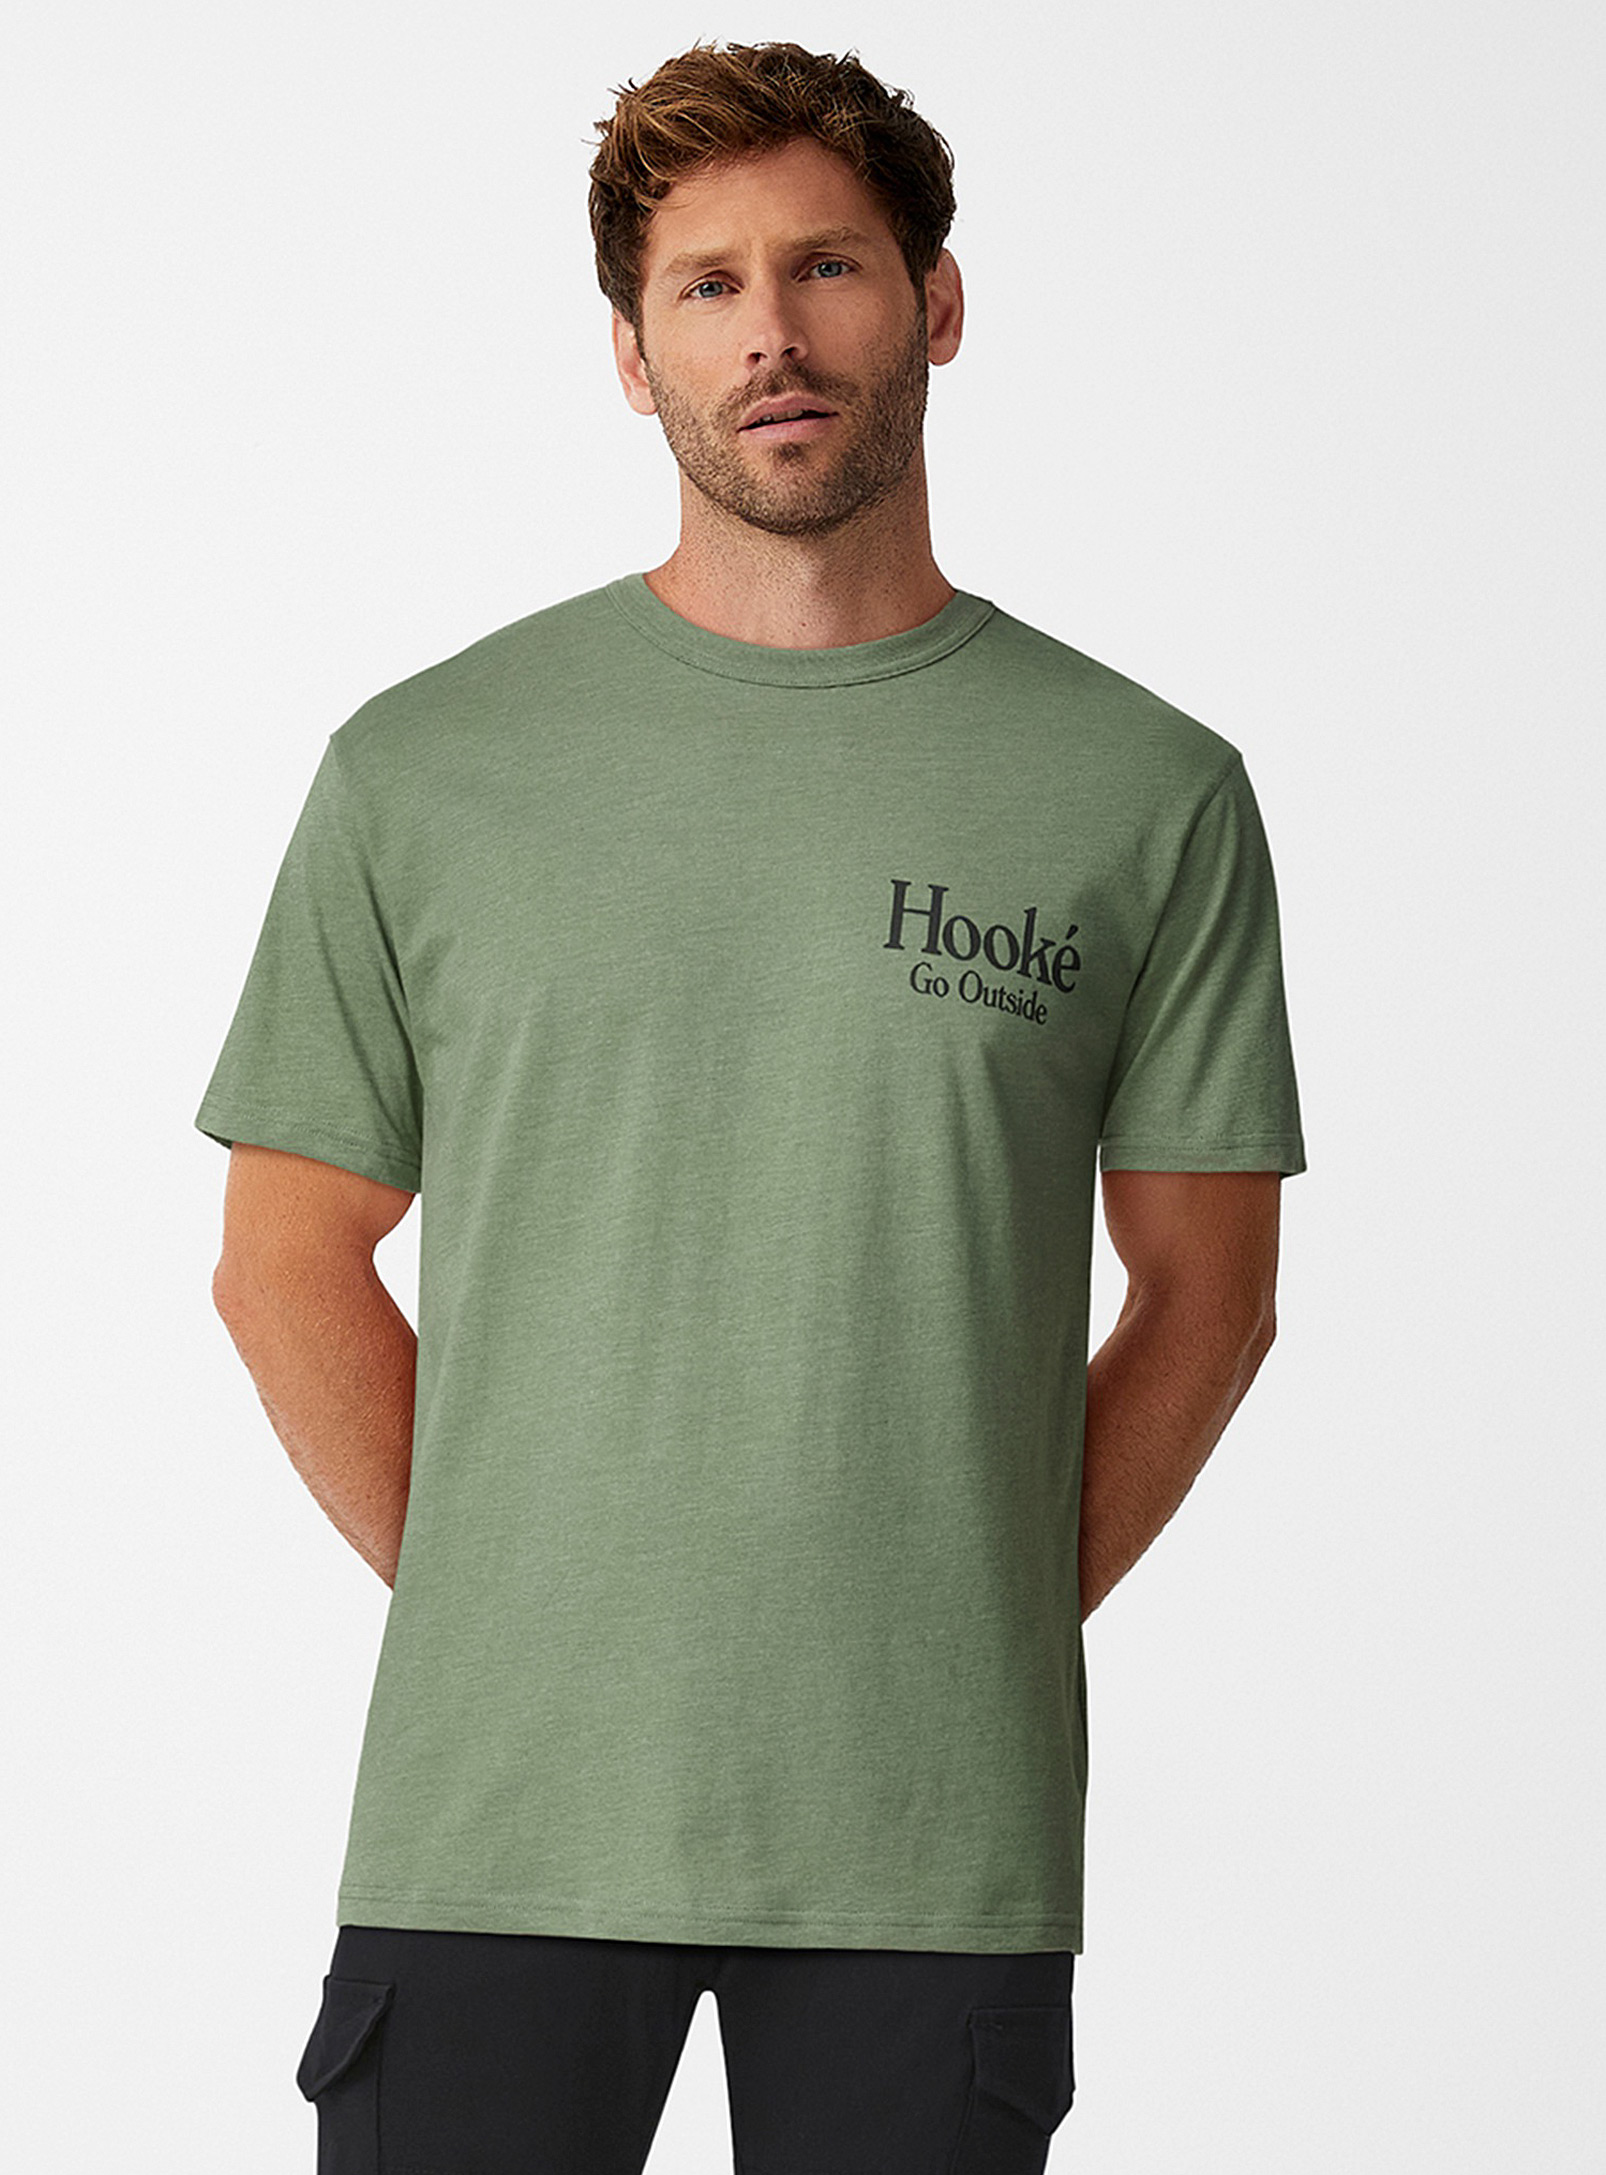 Hooké - Men's Go Outside T-shirt